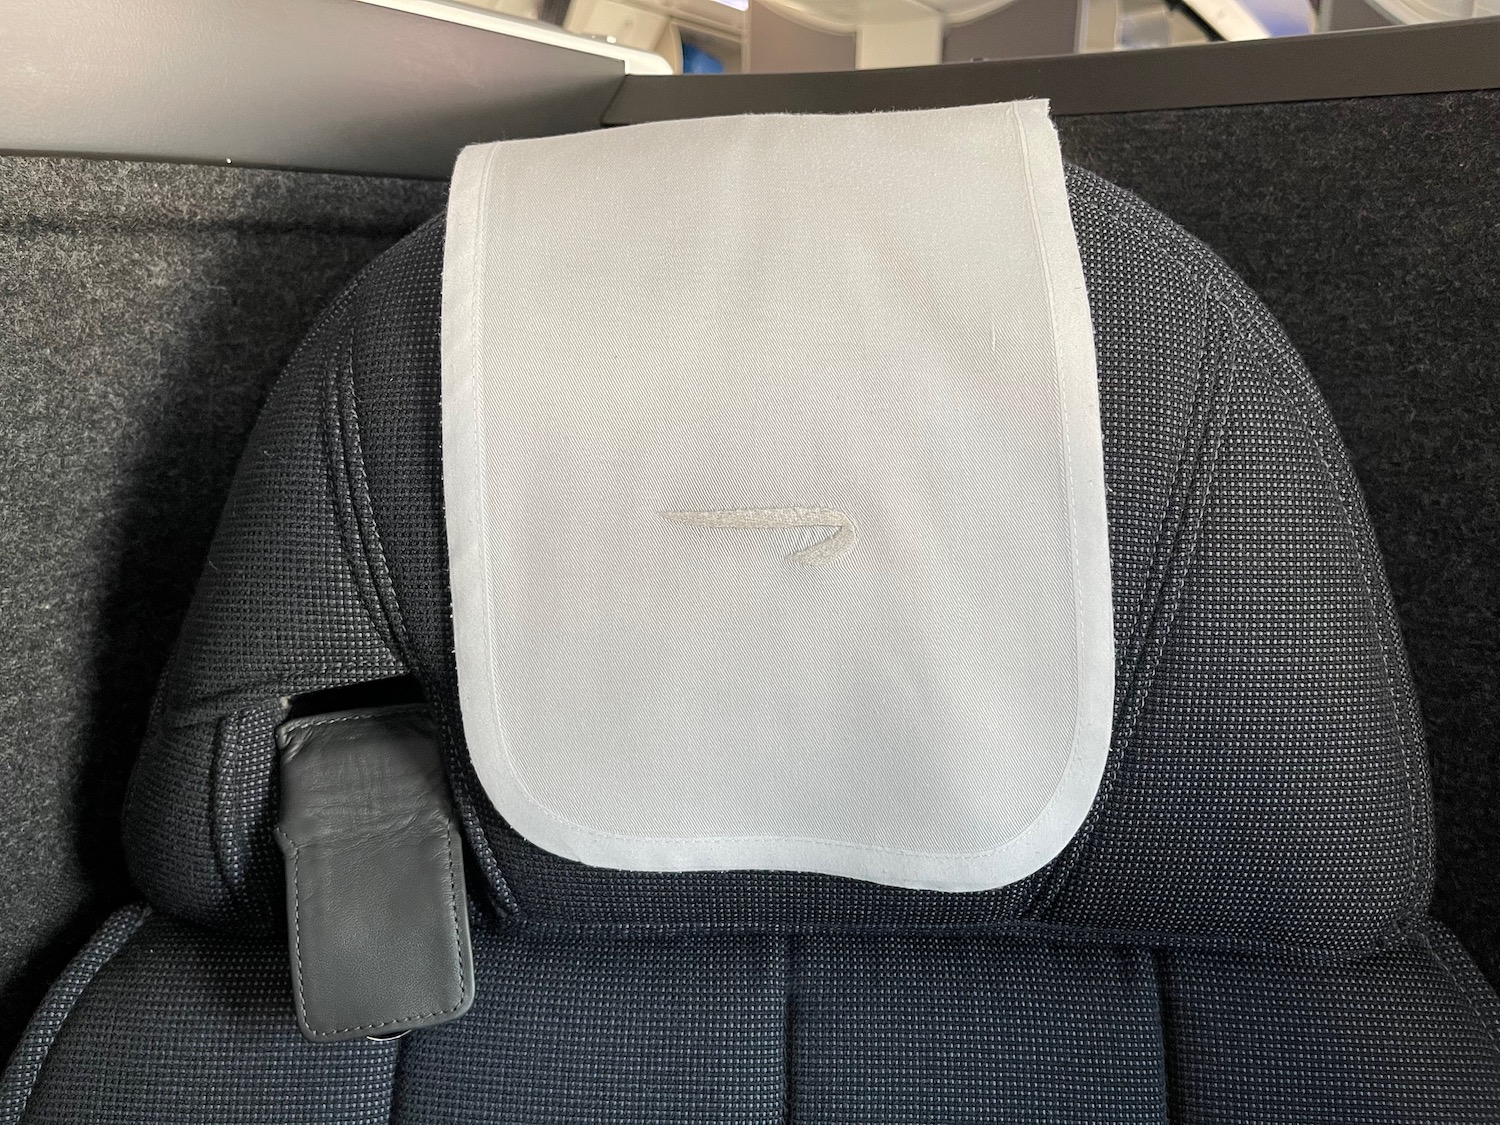 a white cloth on a seat